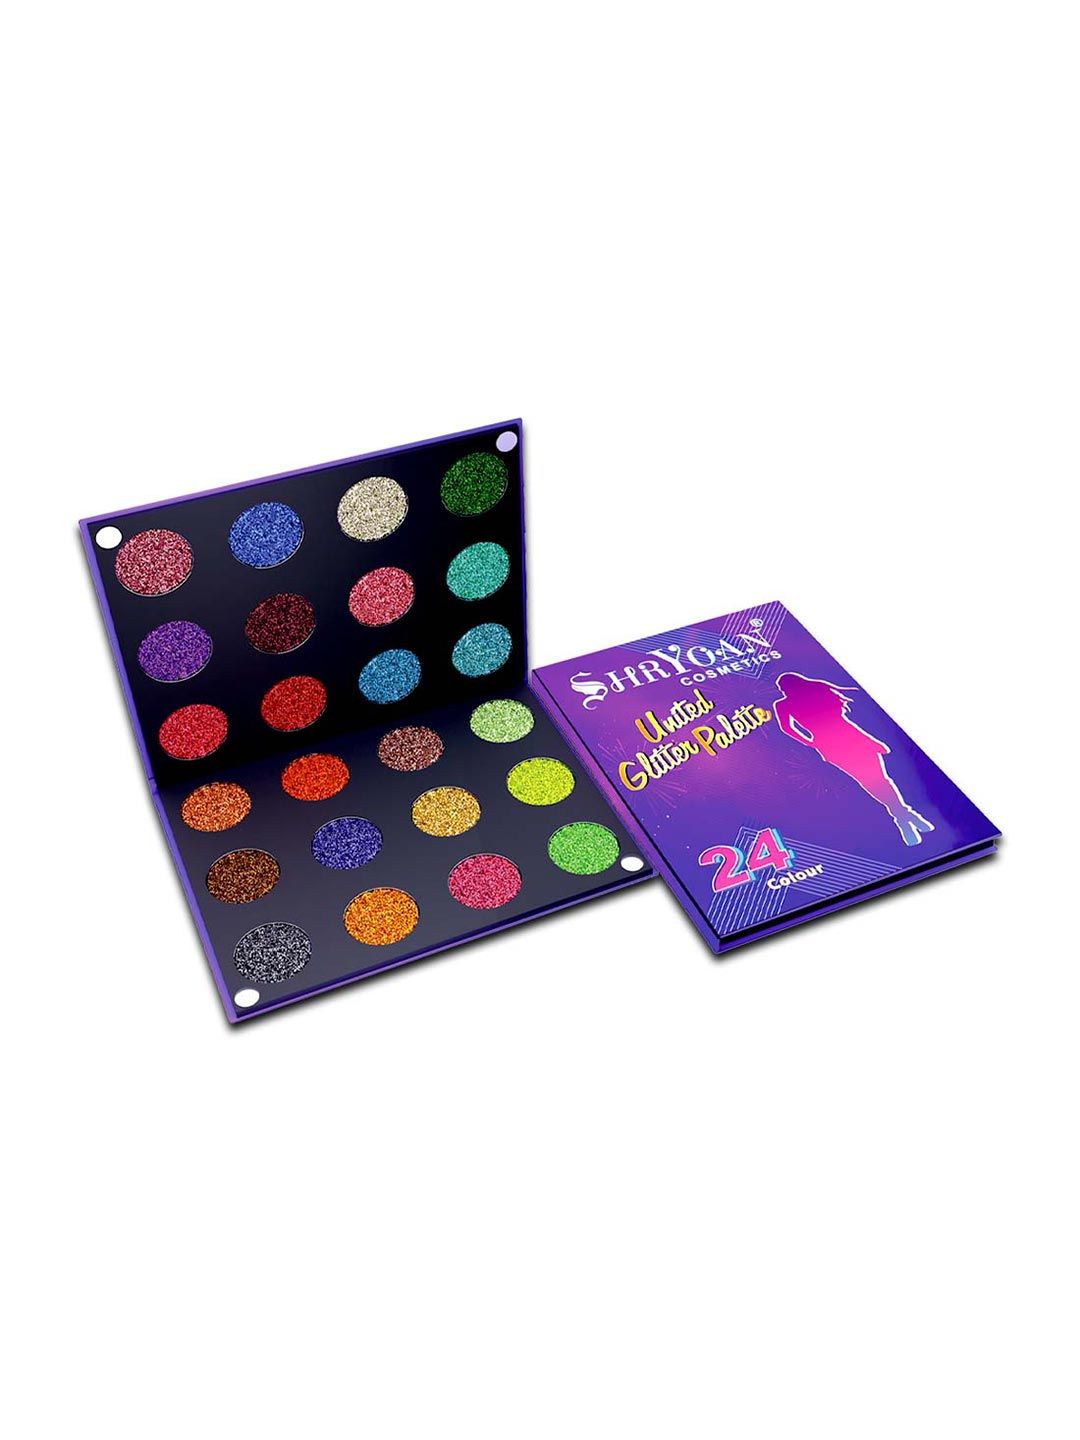 SHRYOAN Women United Glitter Eyeshadow Palette-36g Price in India